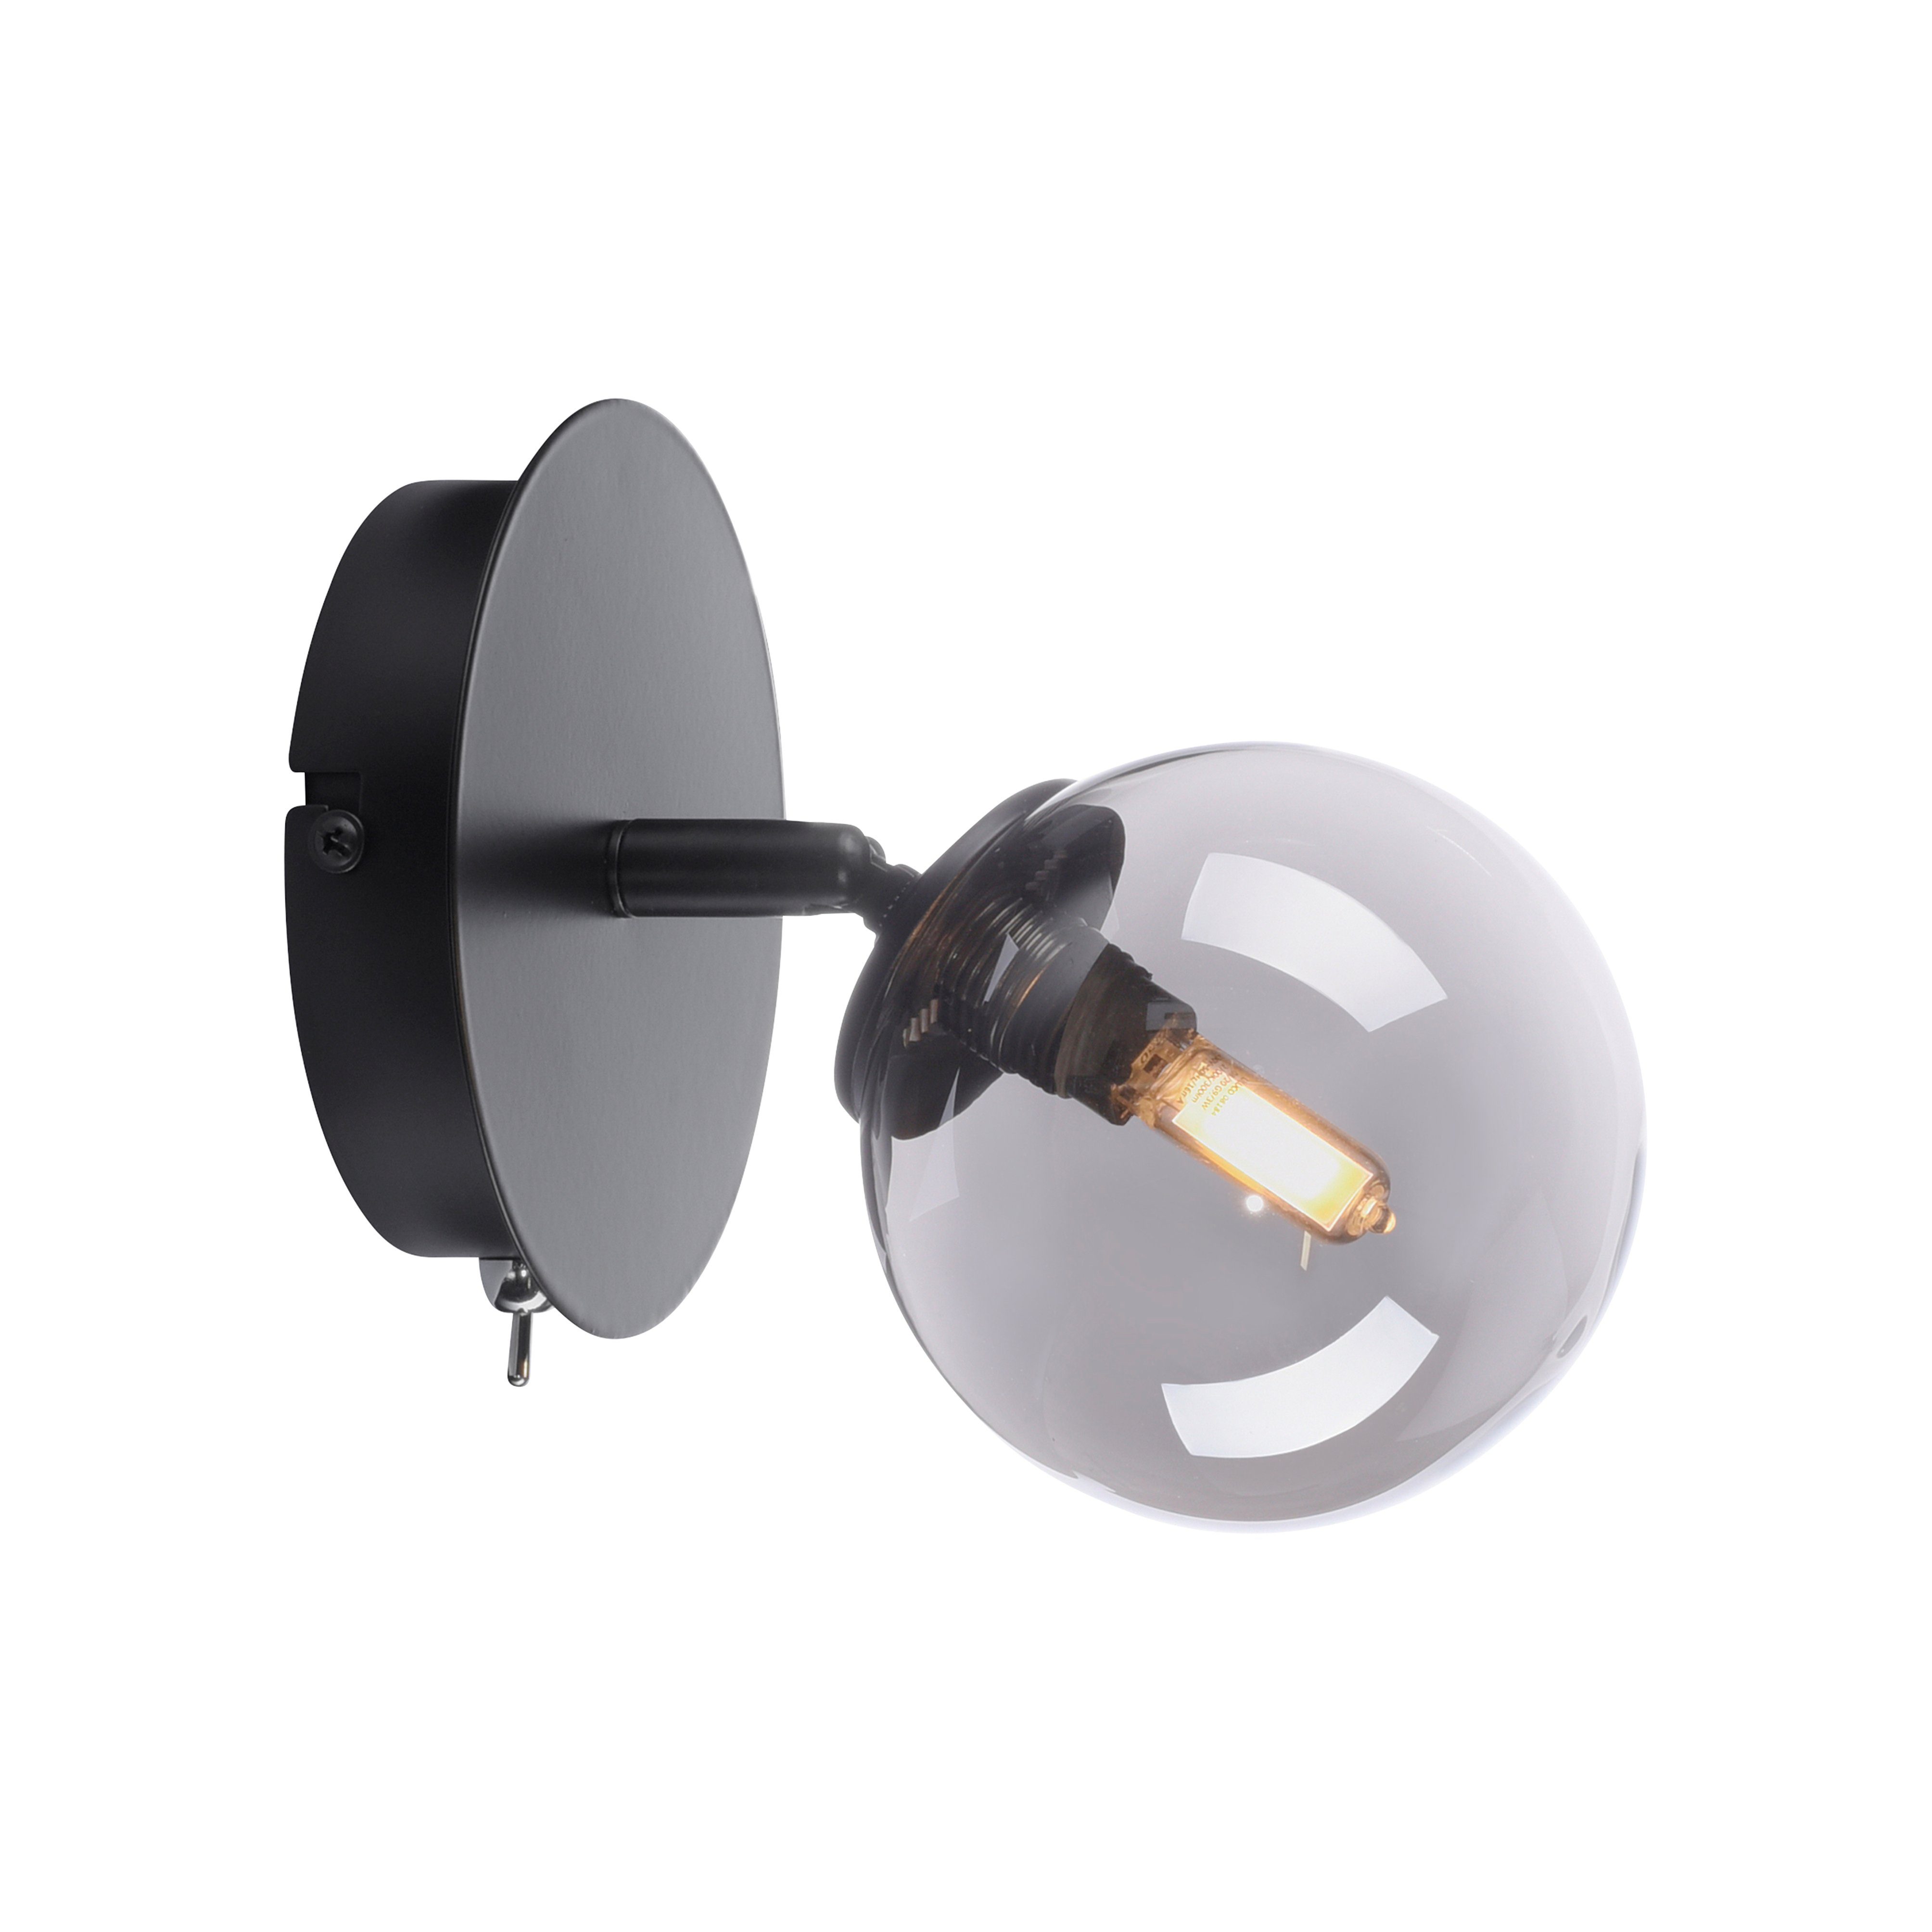 Paul Neuhaus LED Wandleuchte WIDOW, LED wechselbar, Warmweiß, Schalter,  Kippschalter, Schlichtes, schwarzes Rauchglas